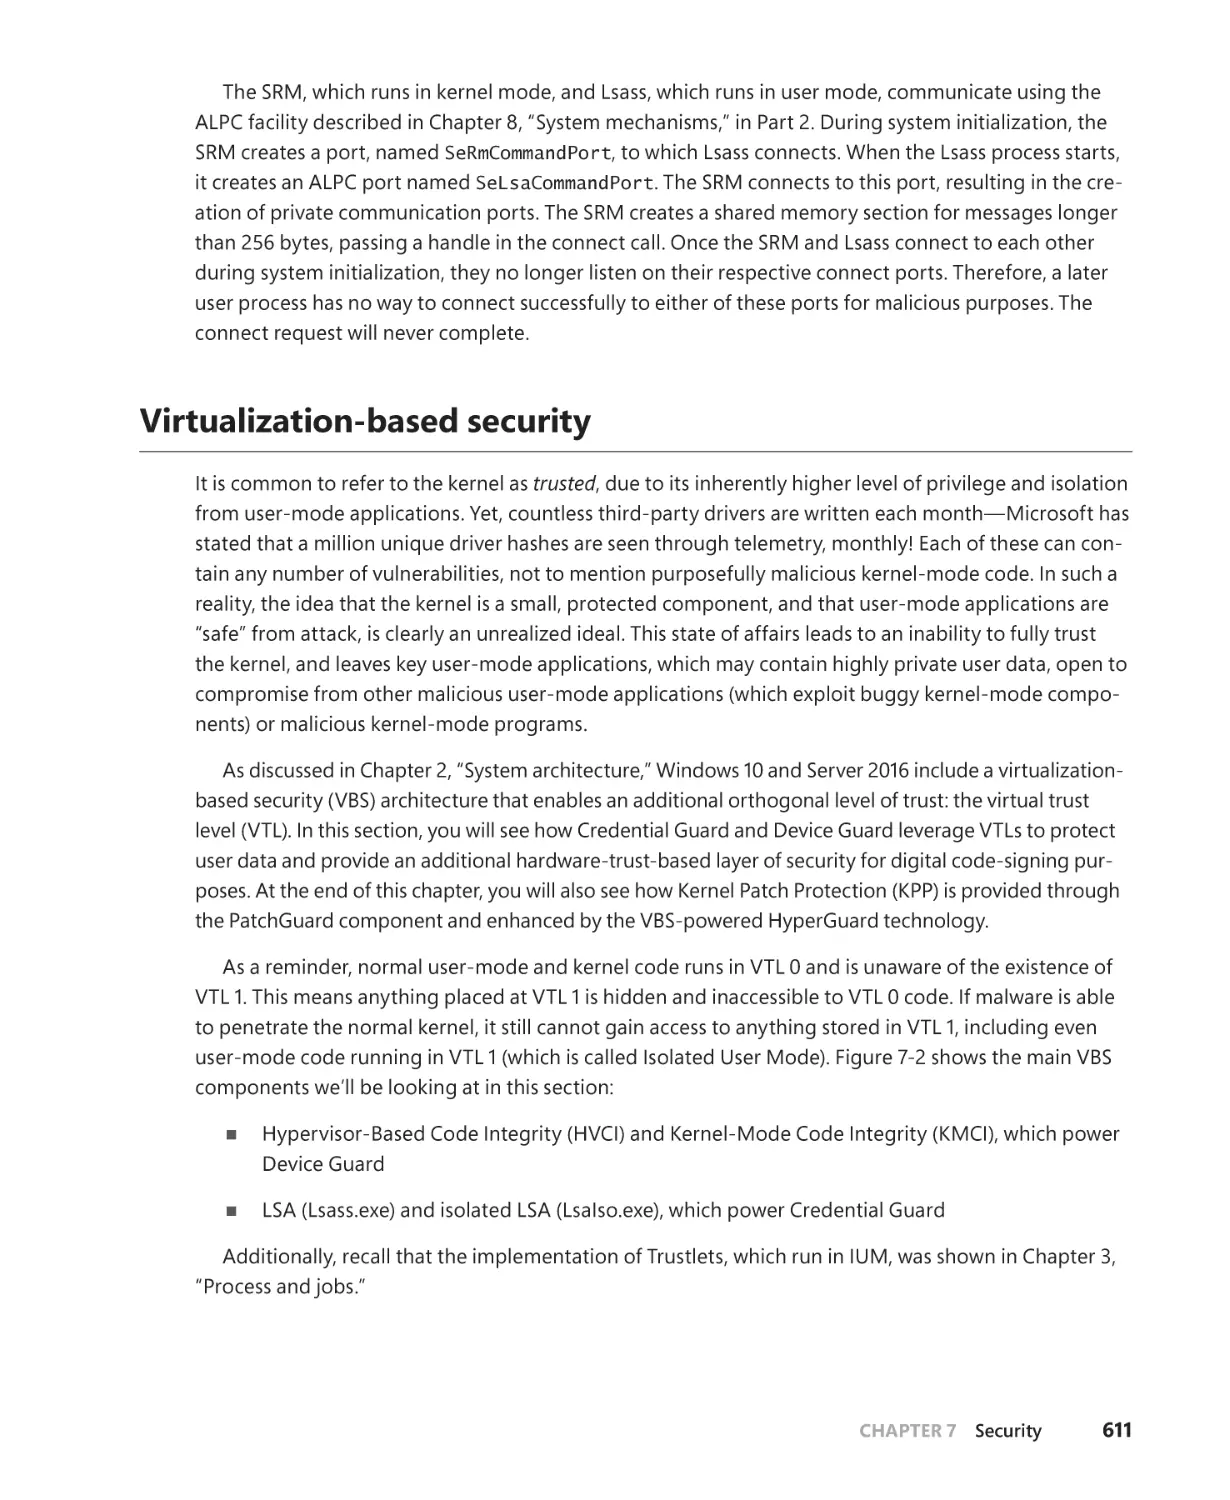 Virtualization-based security